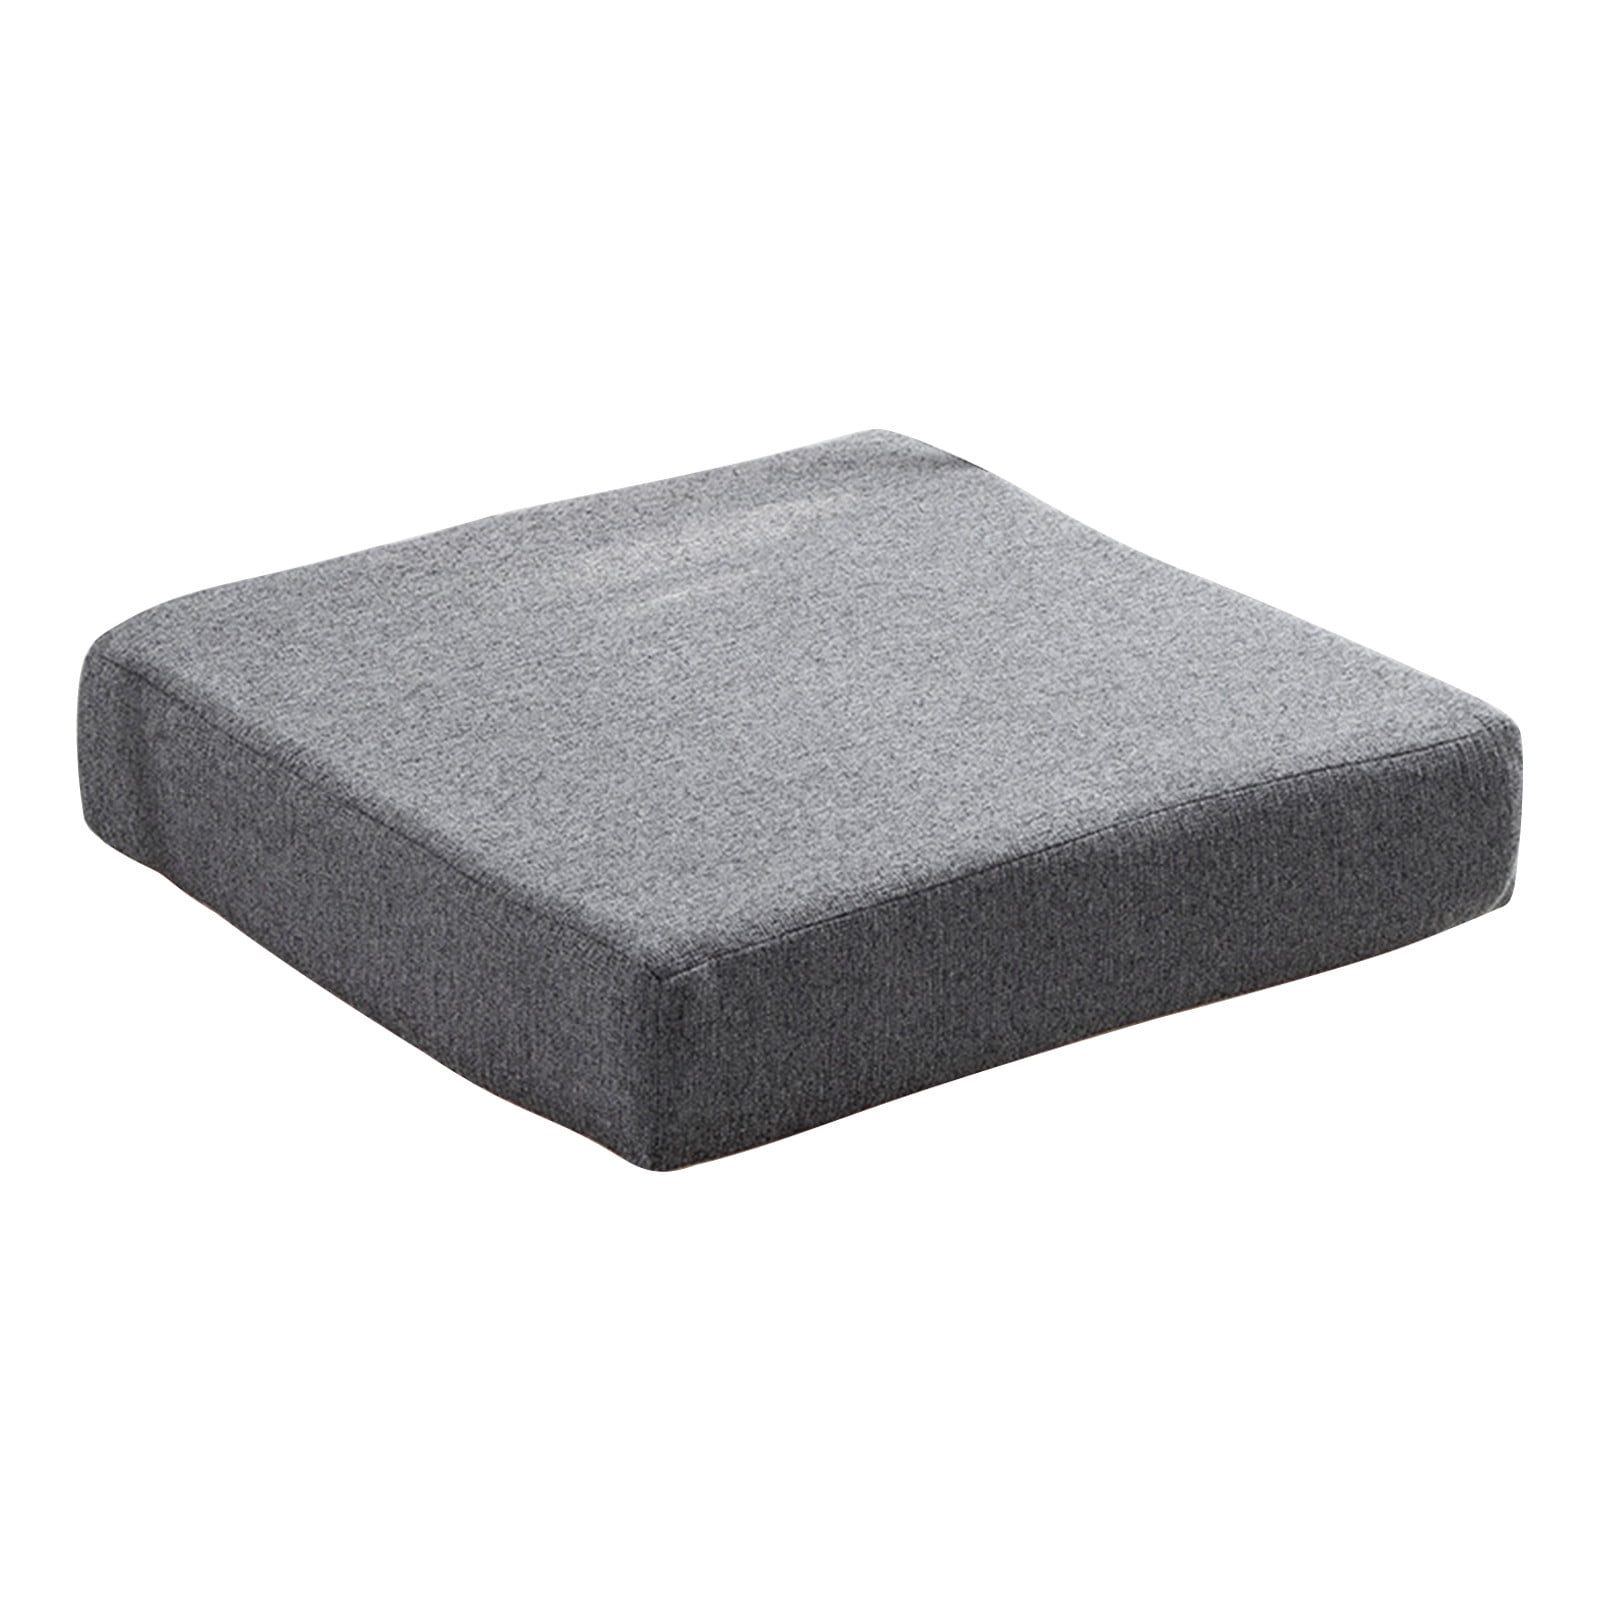 35D High Density Foam Cushion Square Sponge Seat Mat Solid Color Non-Slip  Seat Cushion Chair Back Cushion Soft Protect Hips Mats - AliExpress